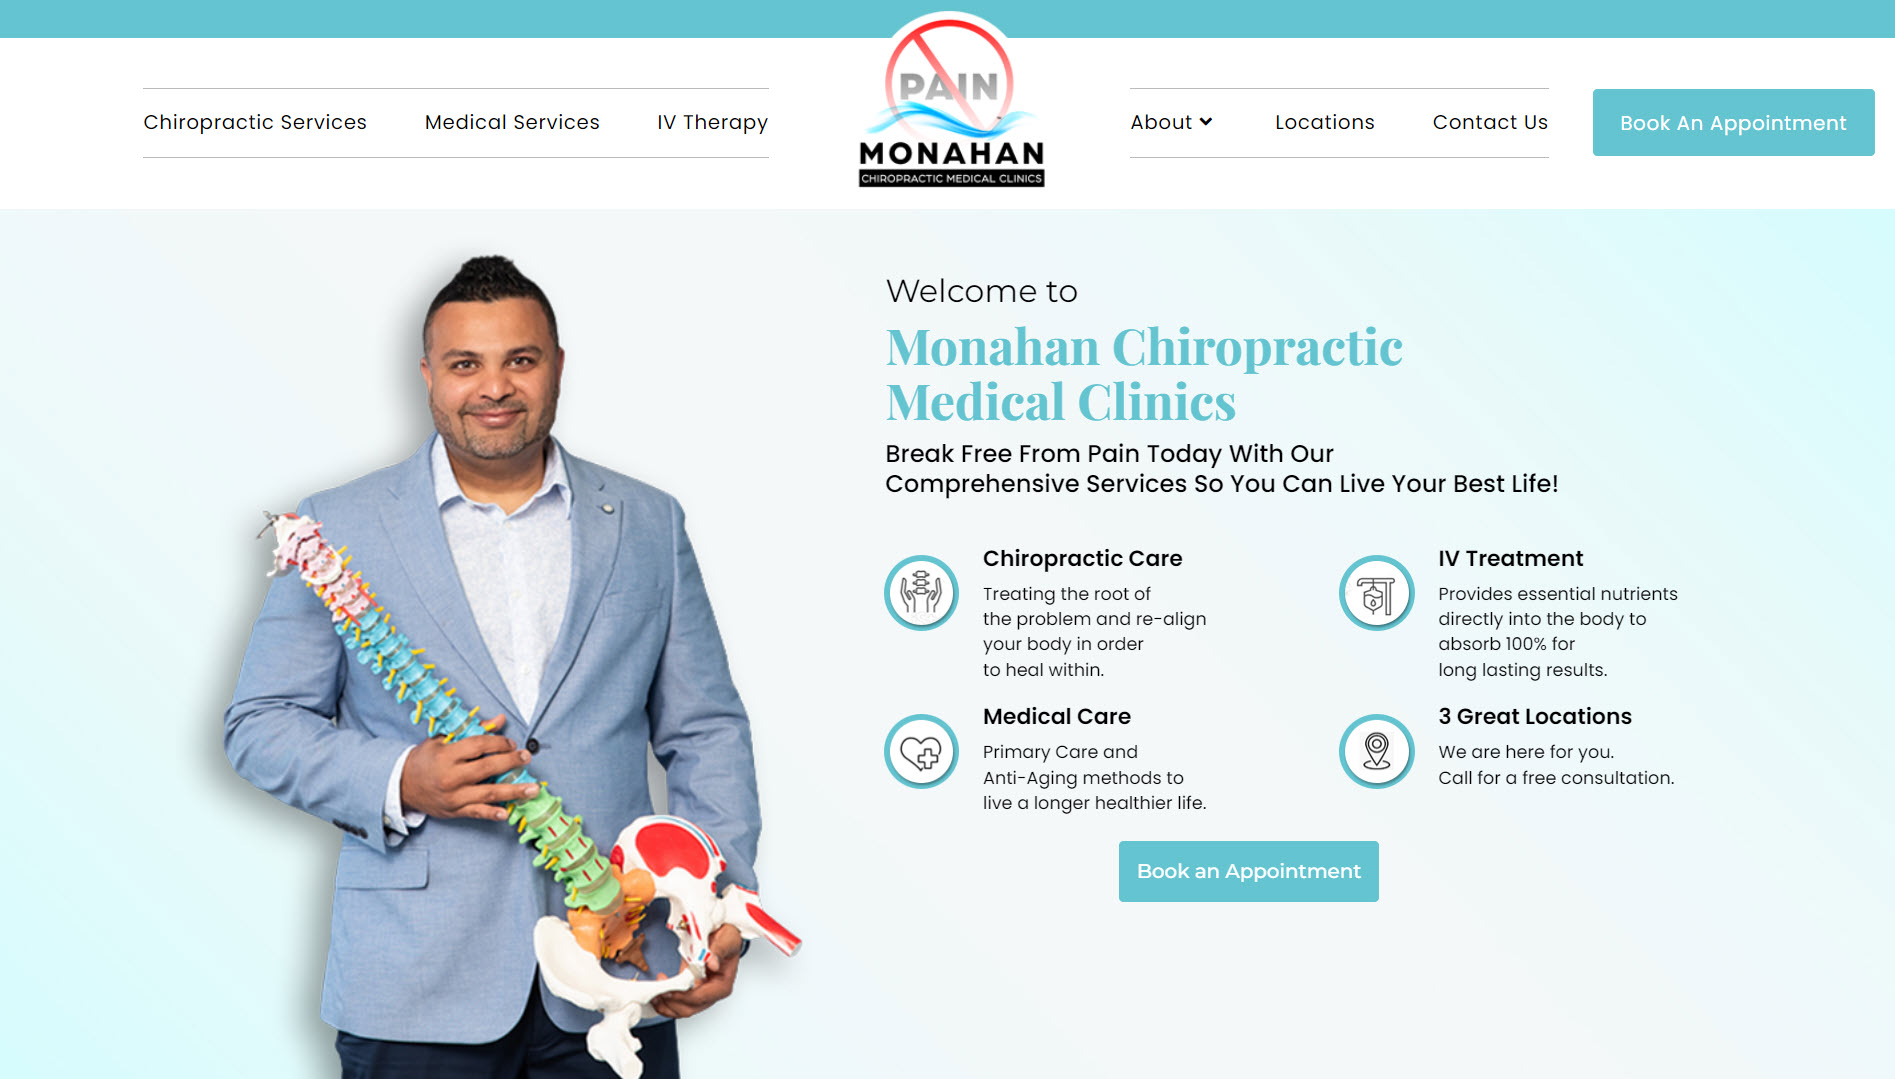 Monahan Chiropractic Medical Clinics